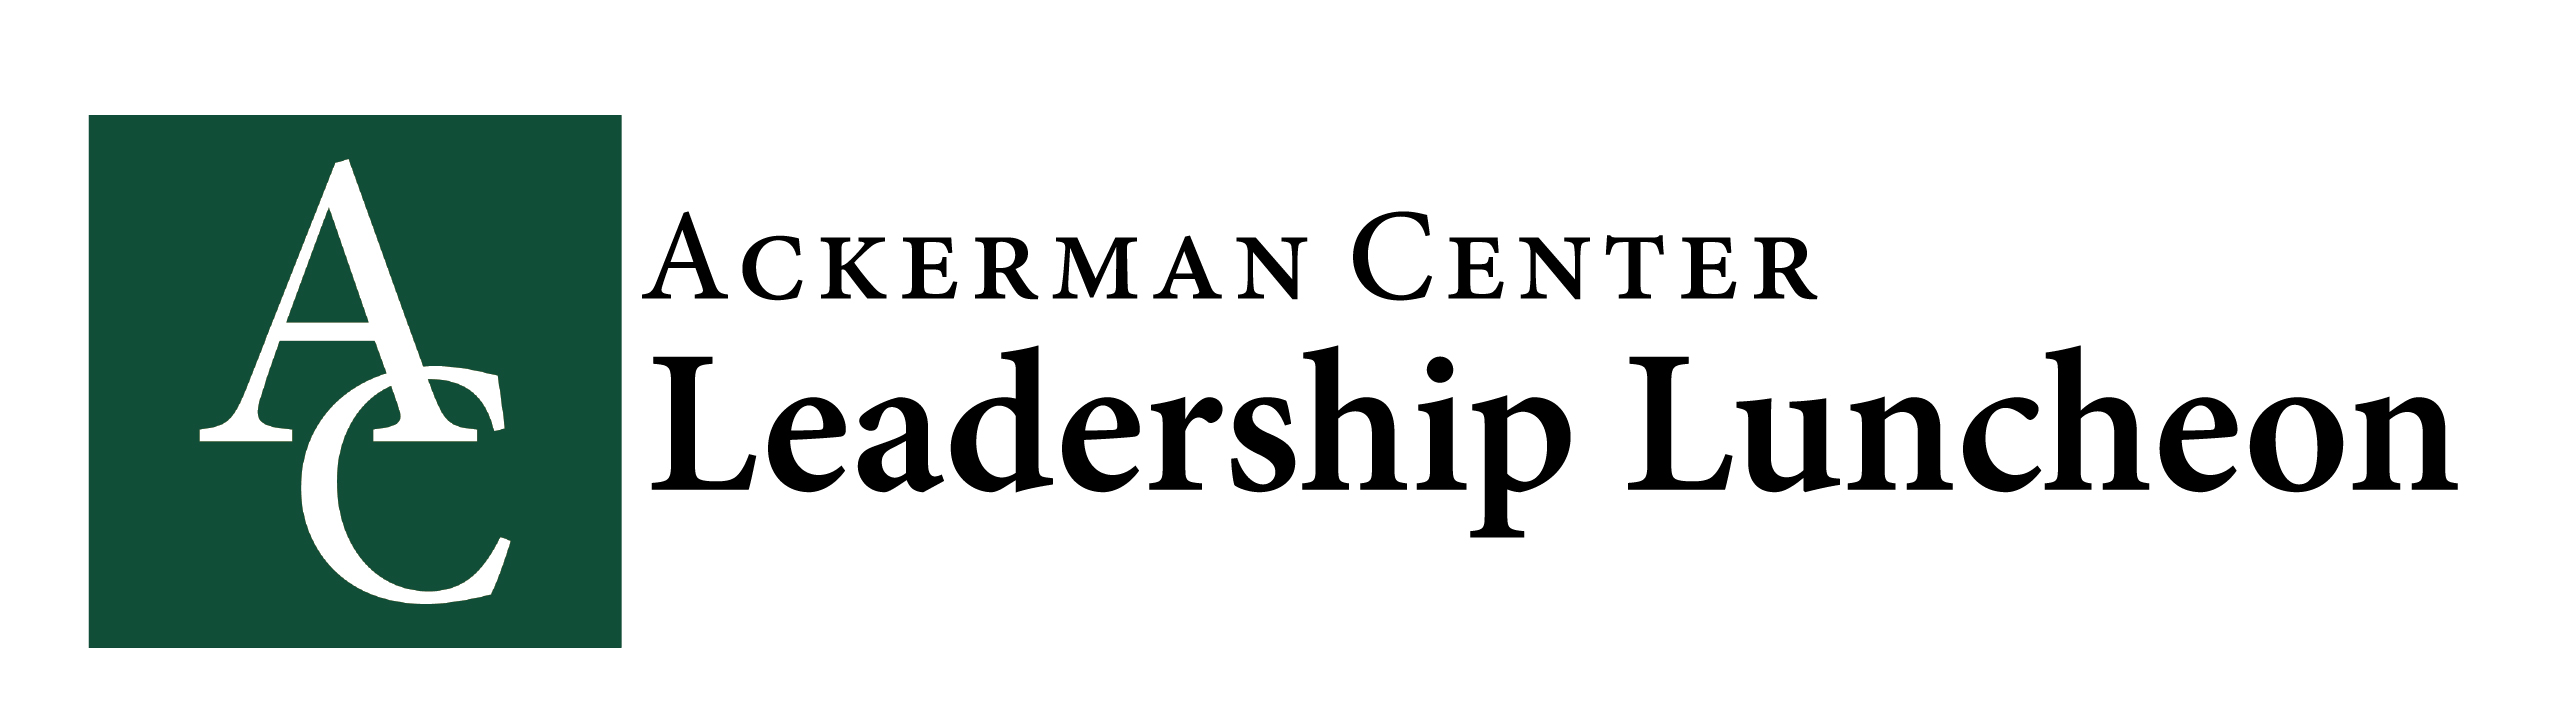 Ackerman Center Leadership Luncheon